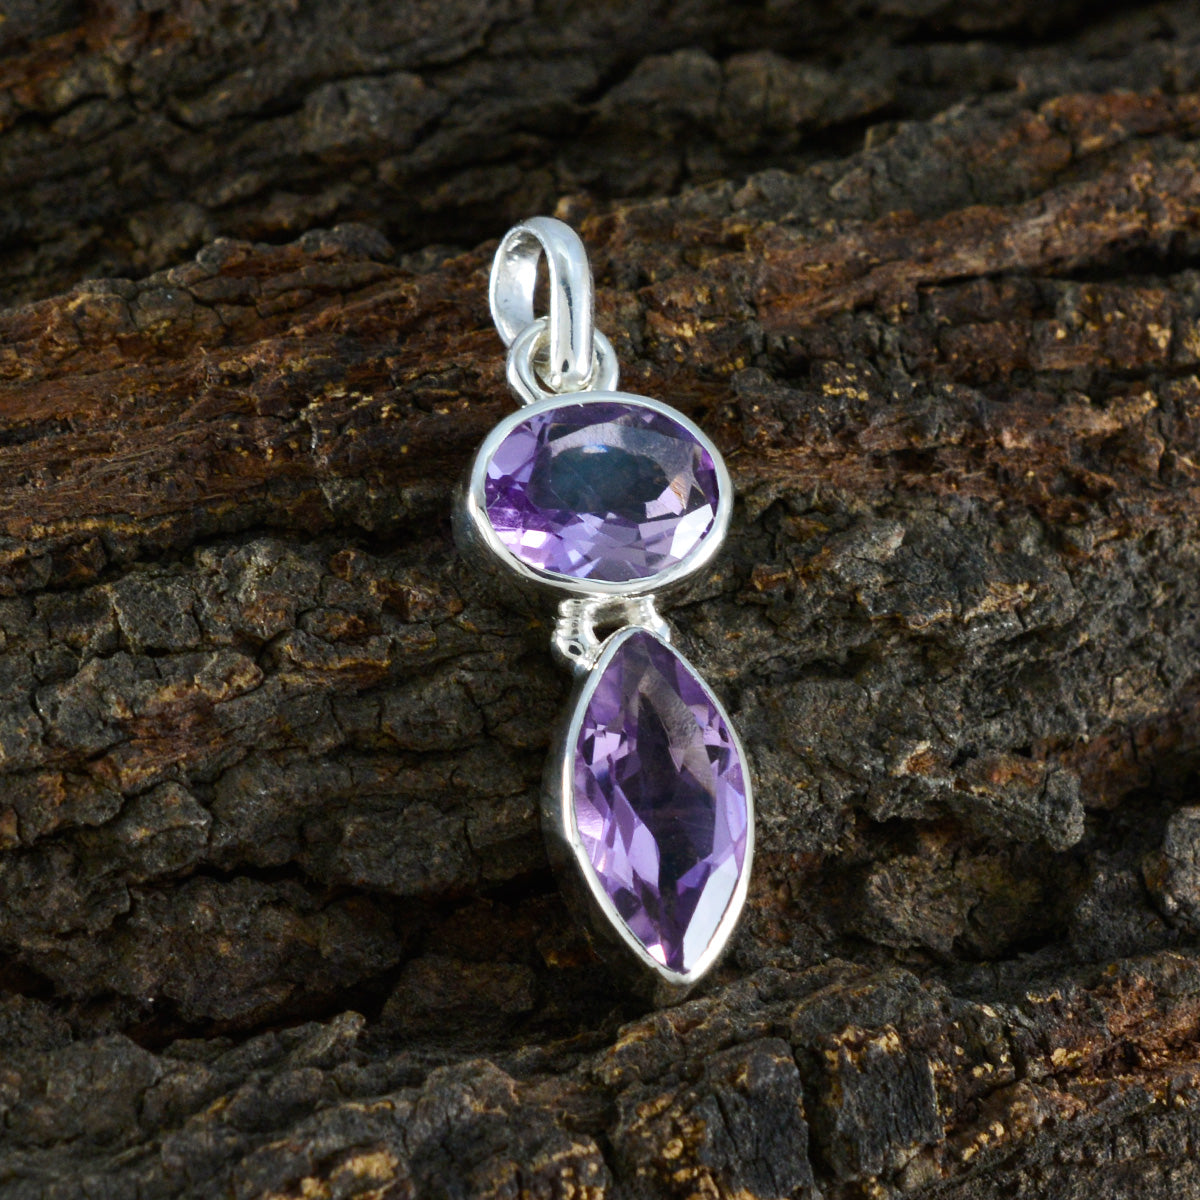 Riyo Graceful Gems Multi Faceted Purple Amethyst Silver Pendant Gift For Sister